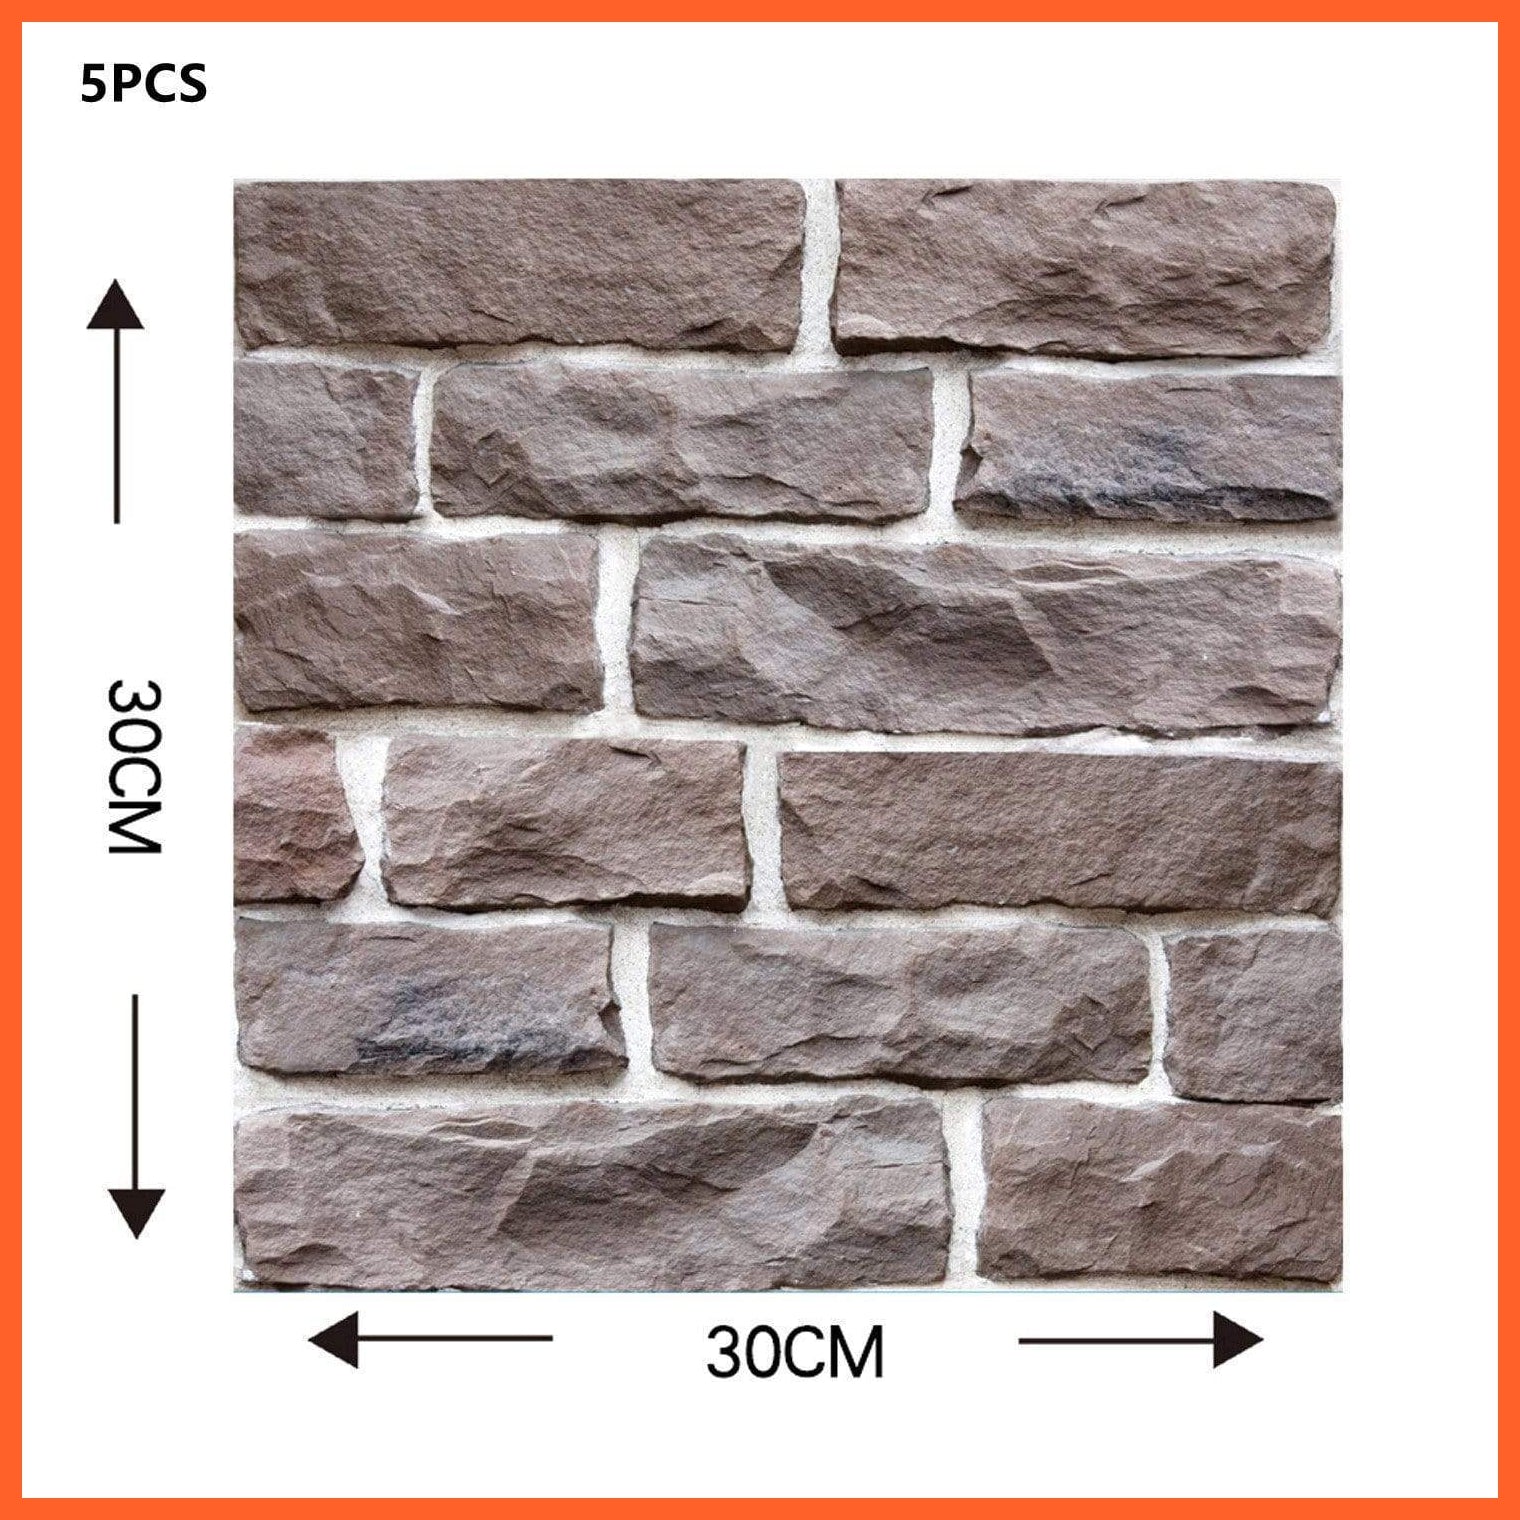 3D Tile Brick Wall Sticker Self-Adhesive Pvc Diy Wallpaper Home Wall Stickers | whatagift.com.au.